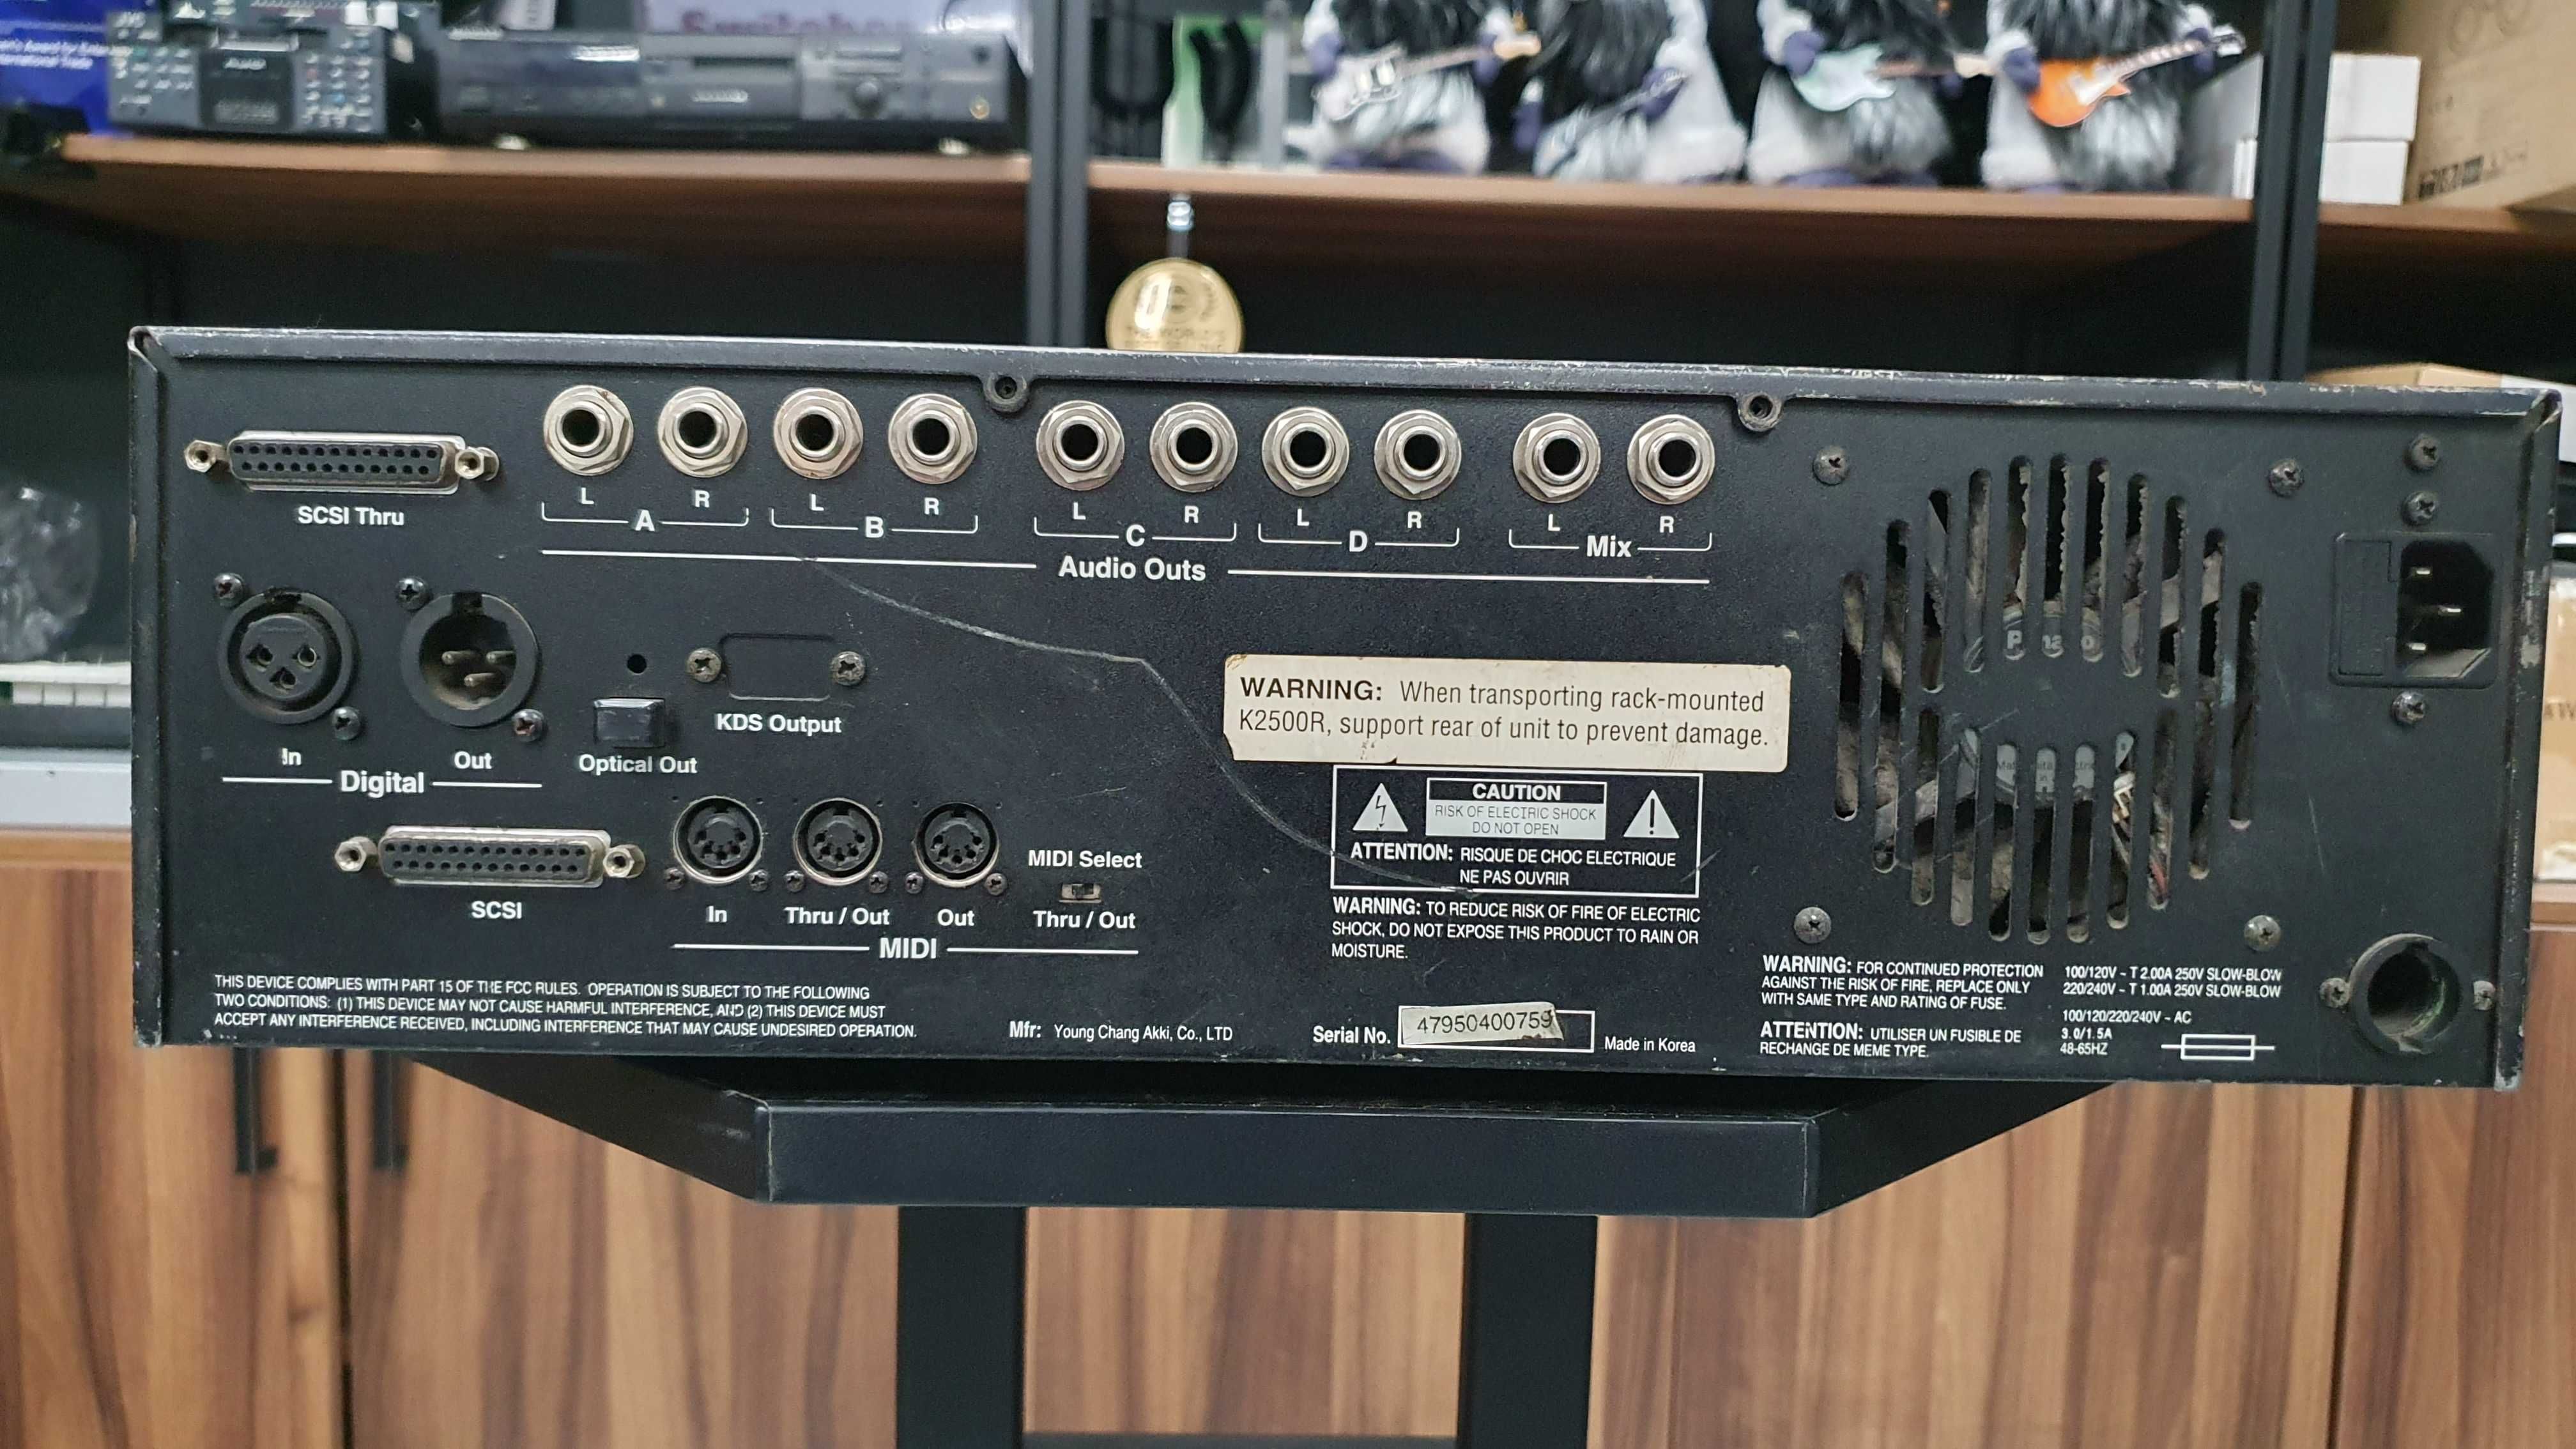 KURZWEIL K2500RS Sampler звуковой модуль-семплер